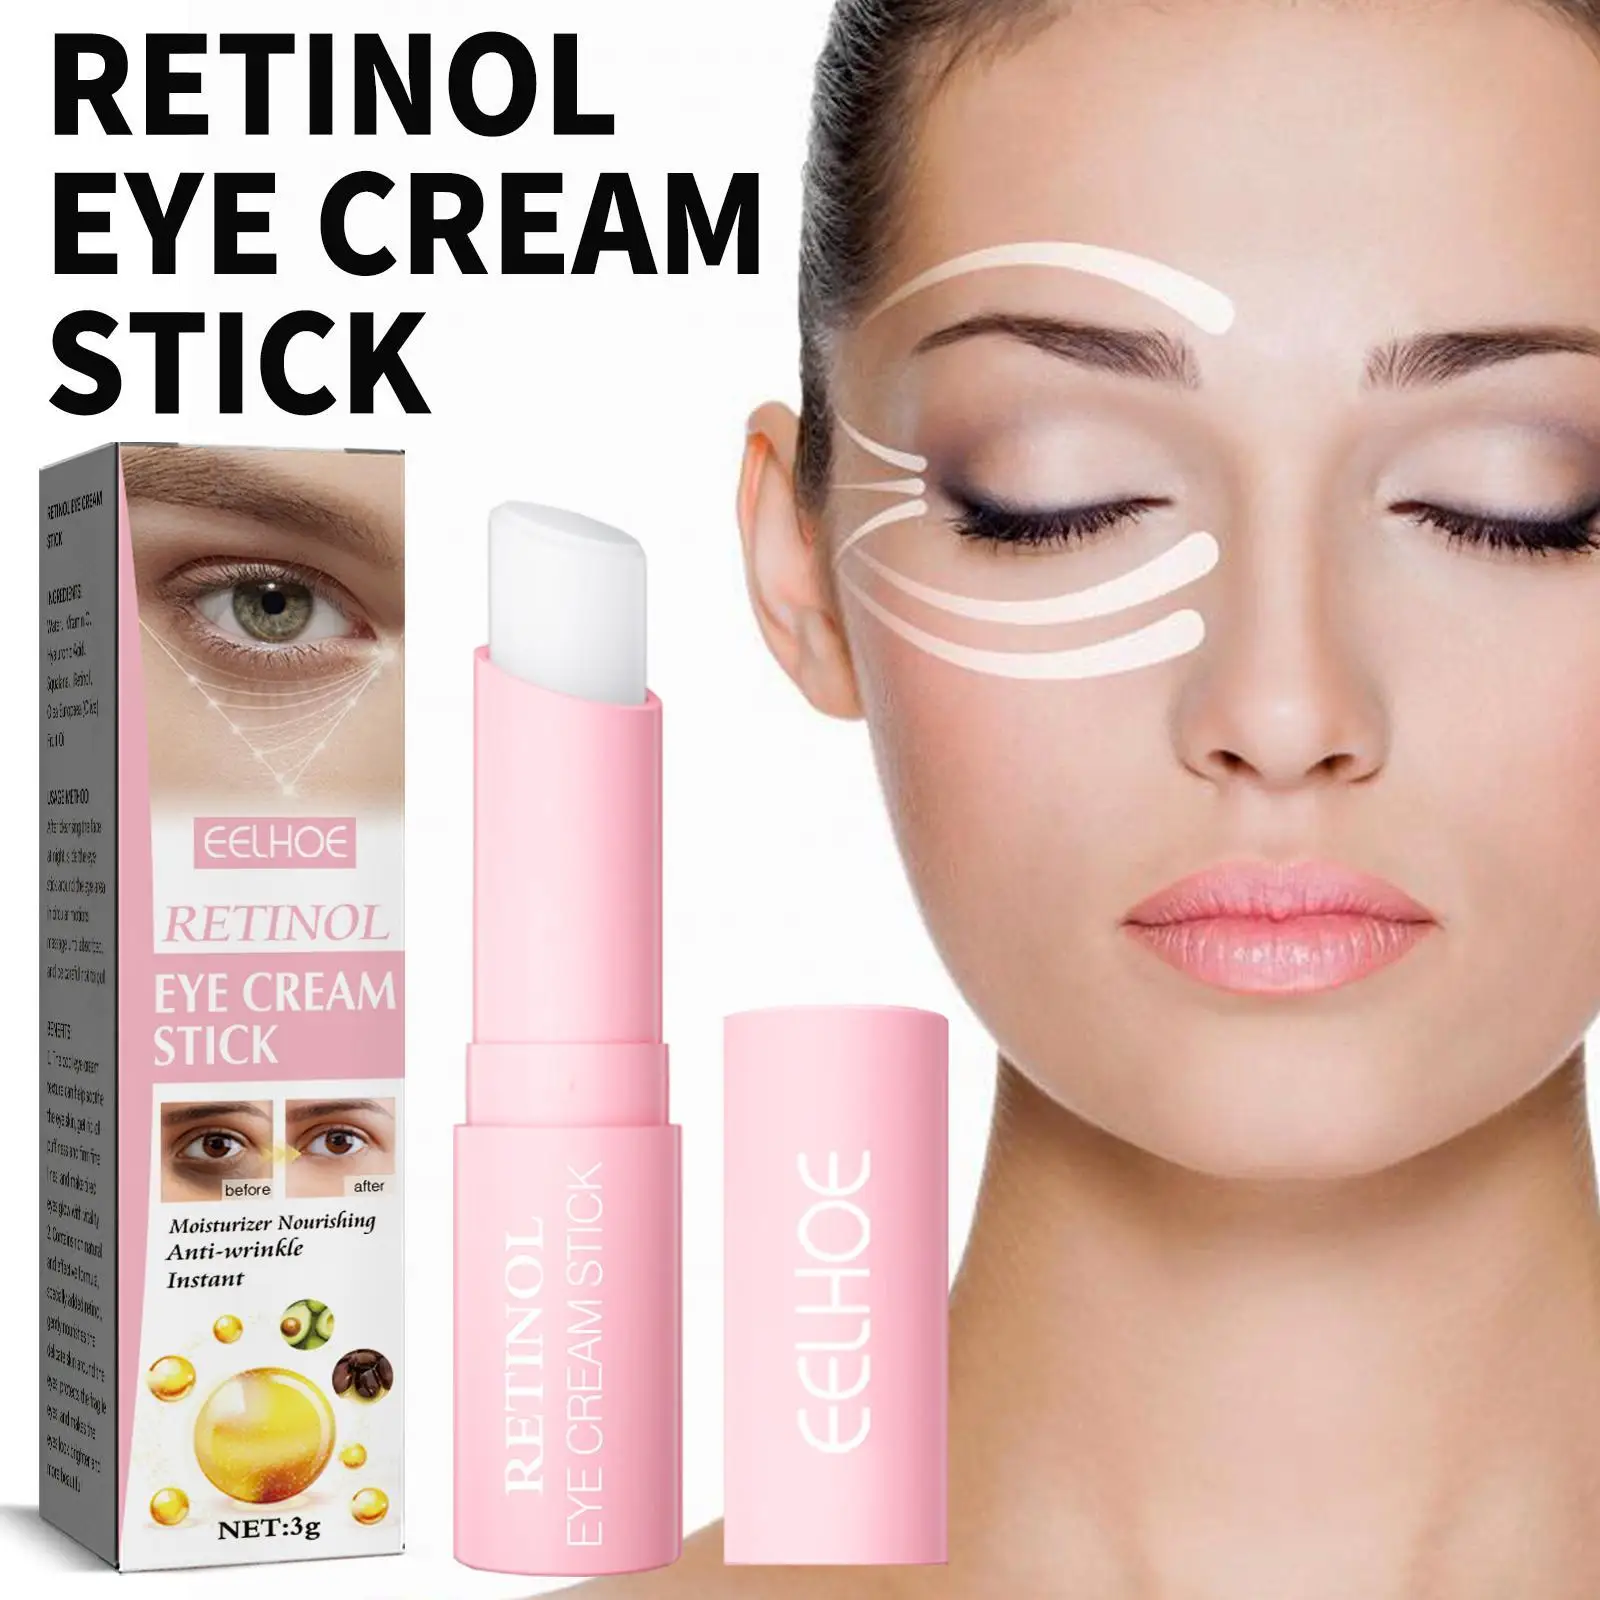 

EELHOE Retinol Eye Cream For Face Lifting Moisturizing Balm Stick Anti-Wrinkle Anti-Puffiness Remove Dark Circles Eye Bags Care